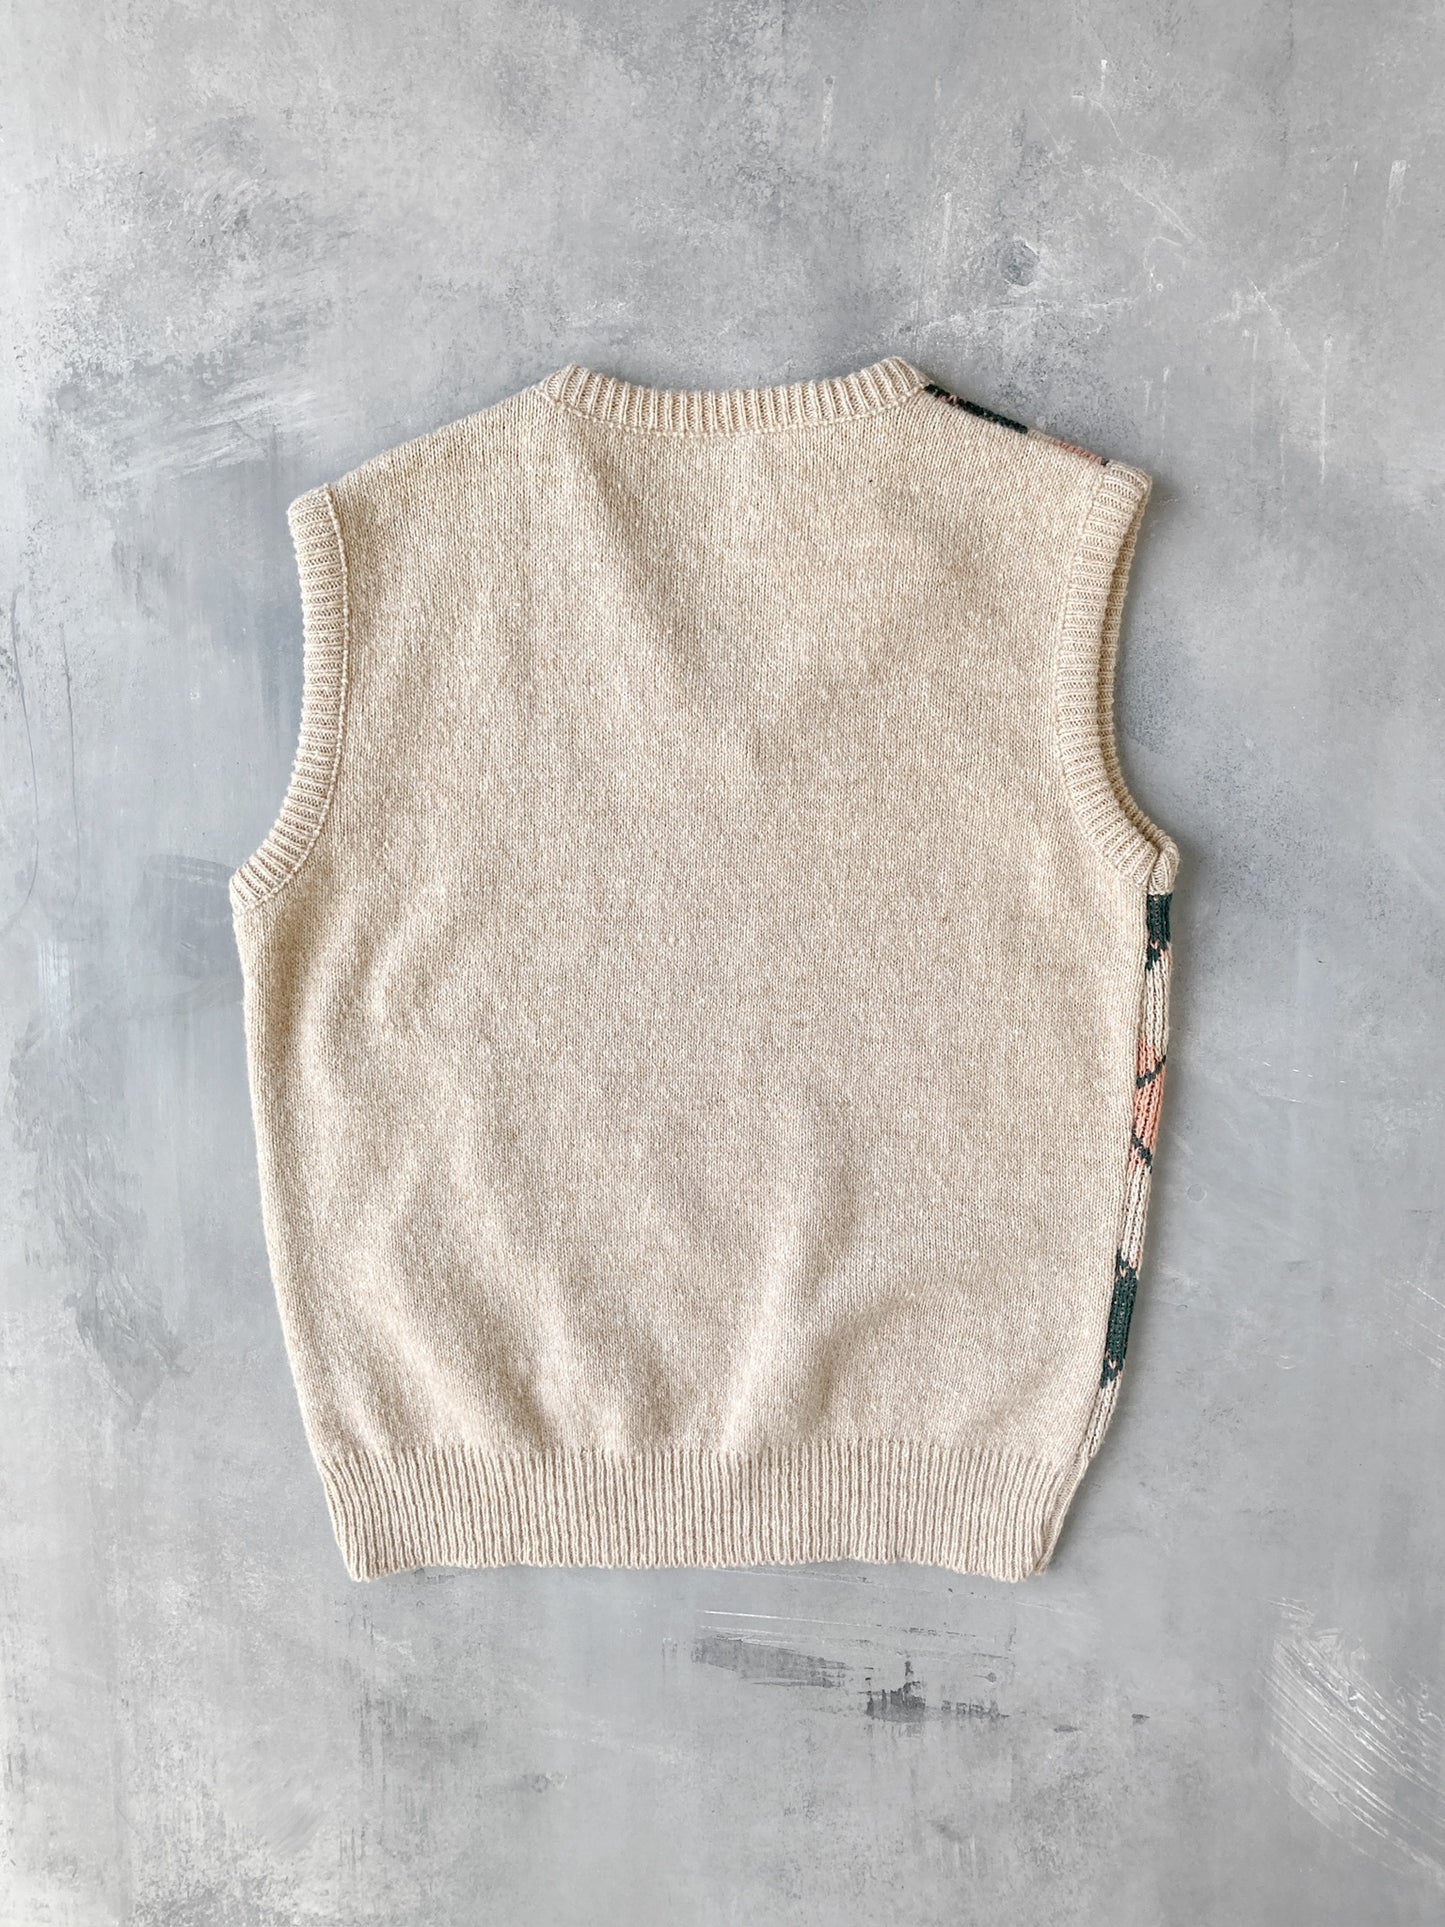 Argyle Sweater Vest 80's - Small / Medium